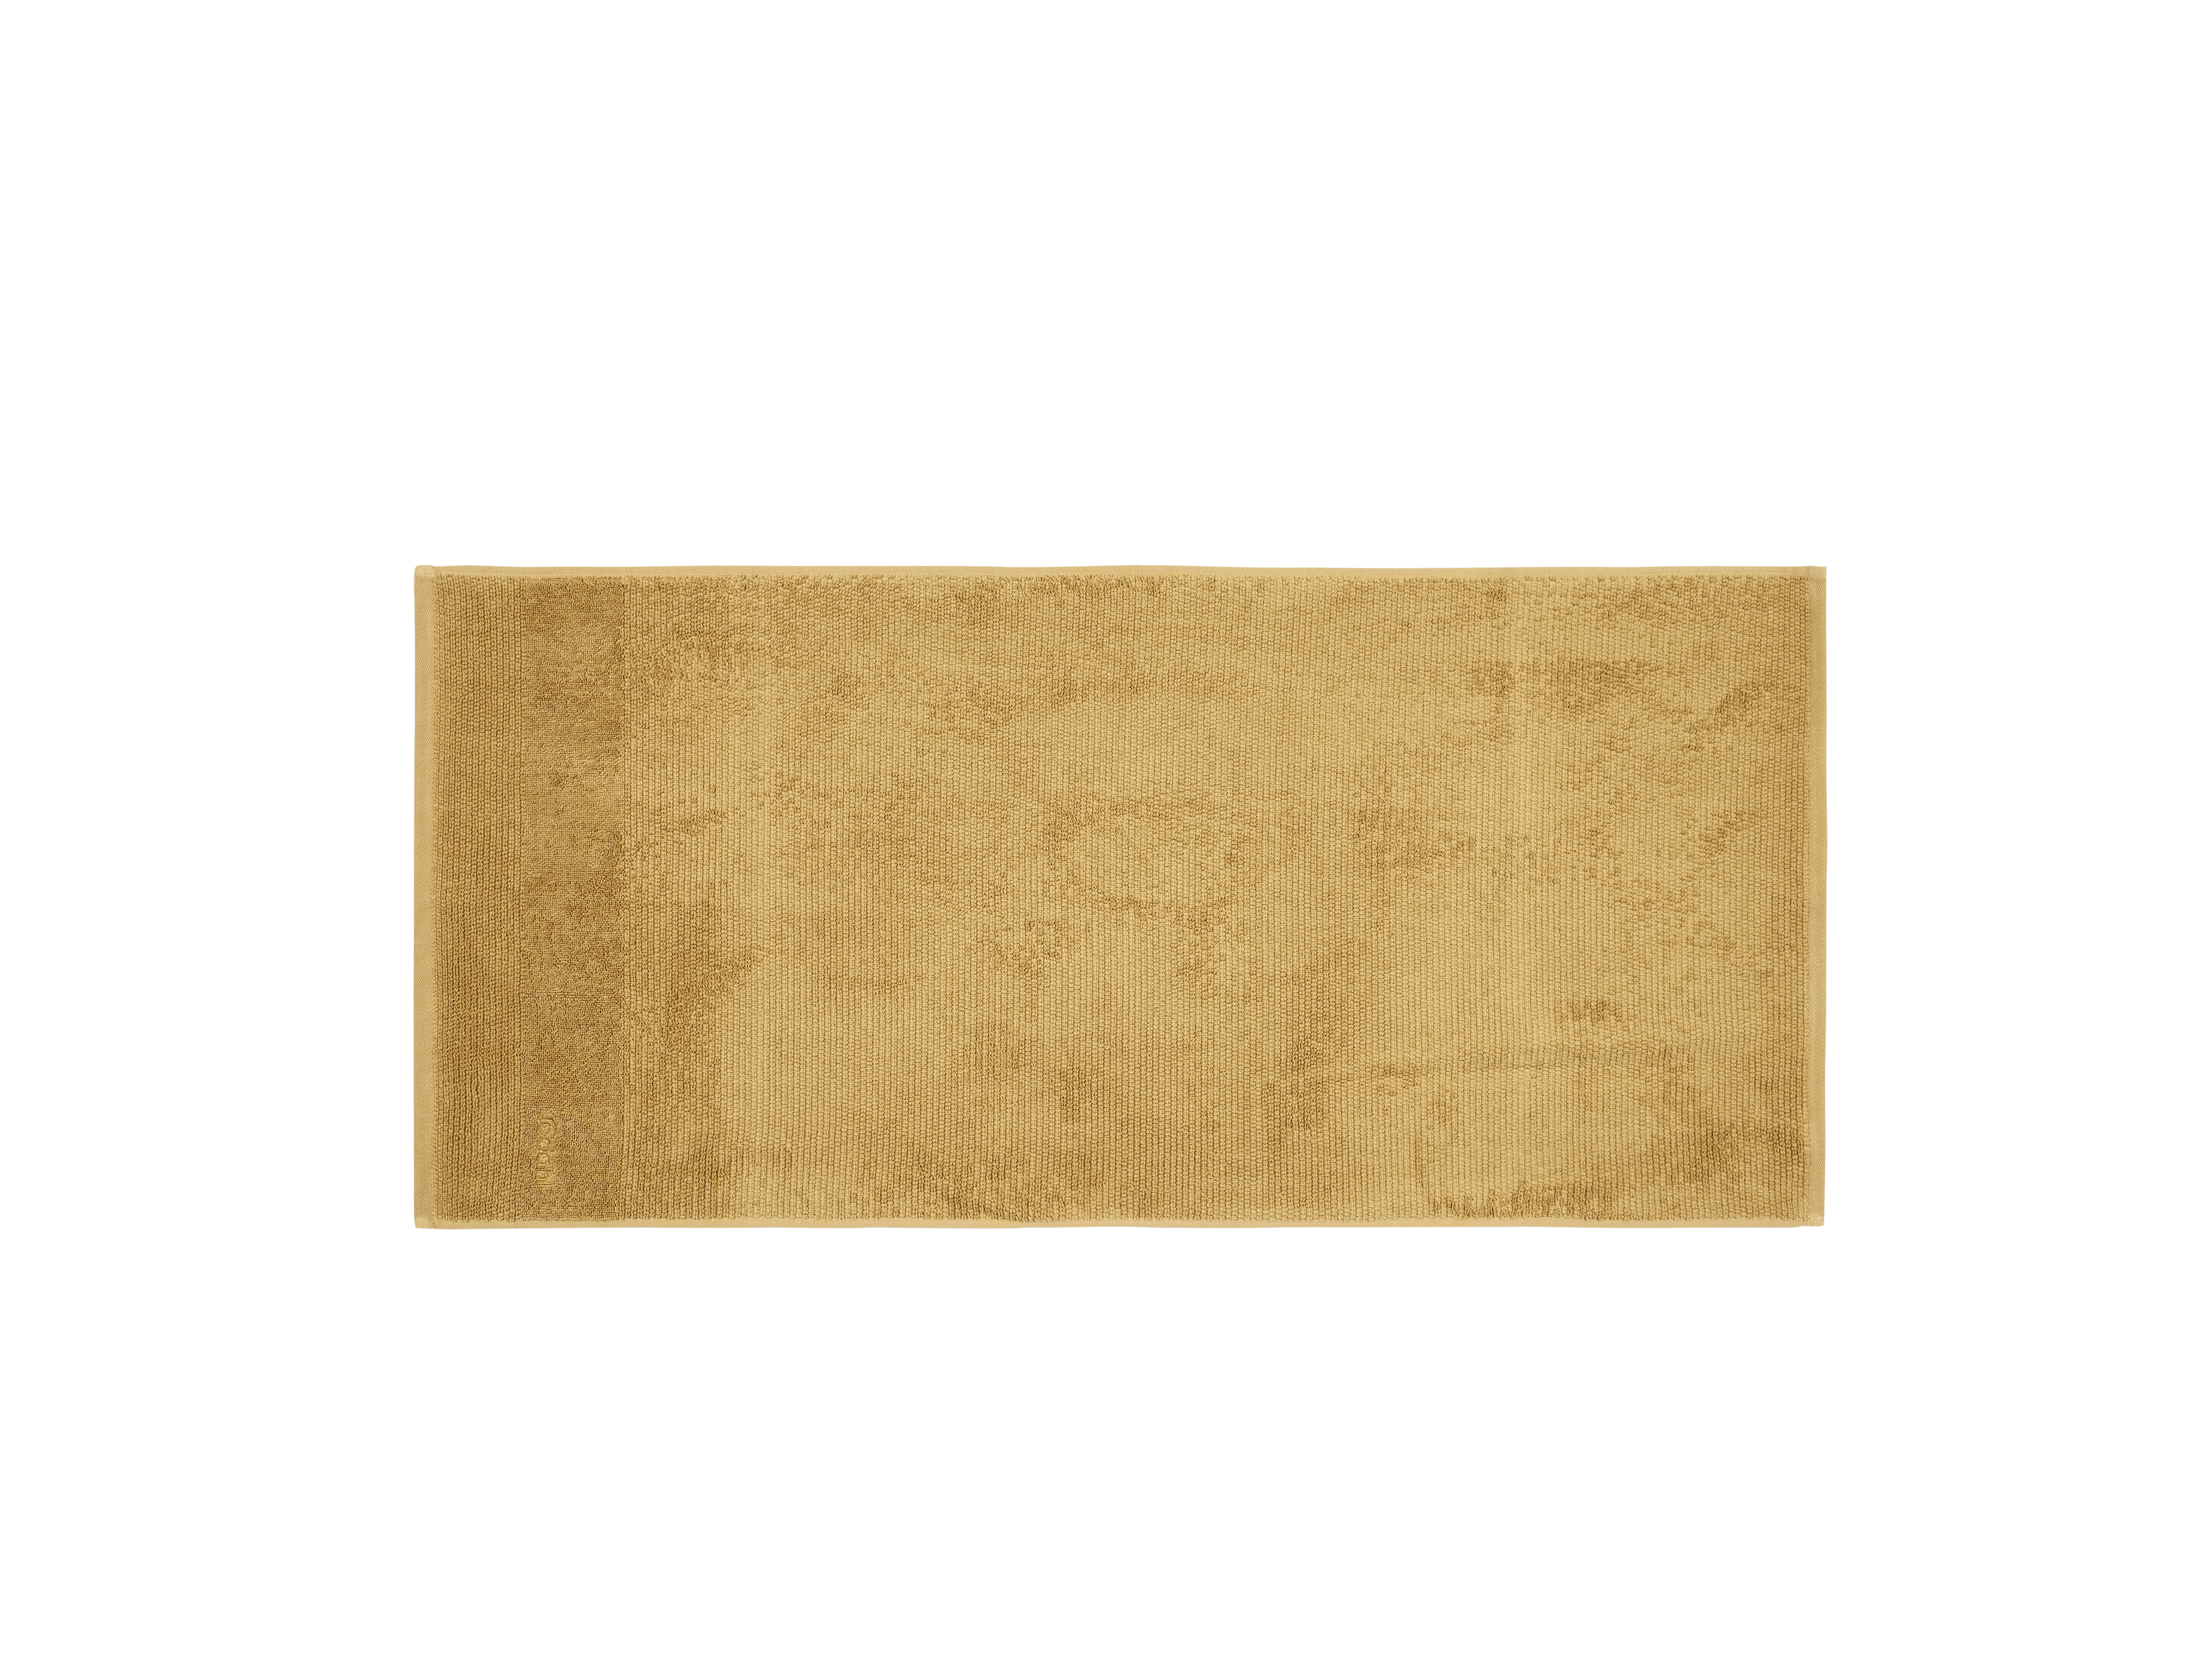  Sense Håndklæde, Golden, 50x100 cm